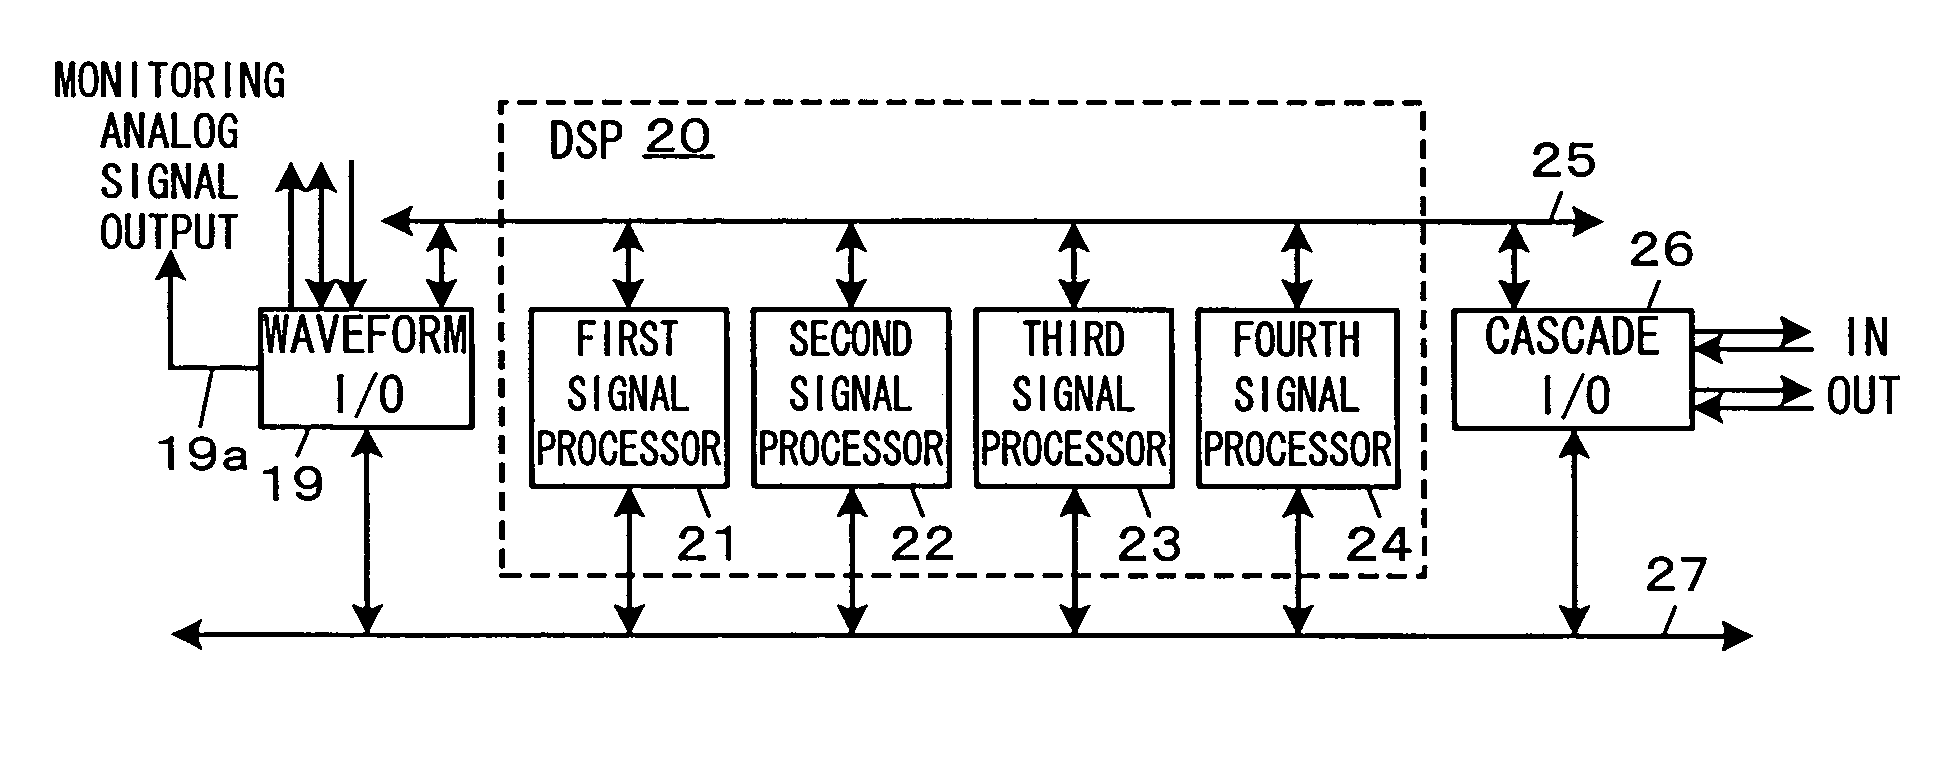 Audio signal processing system